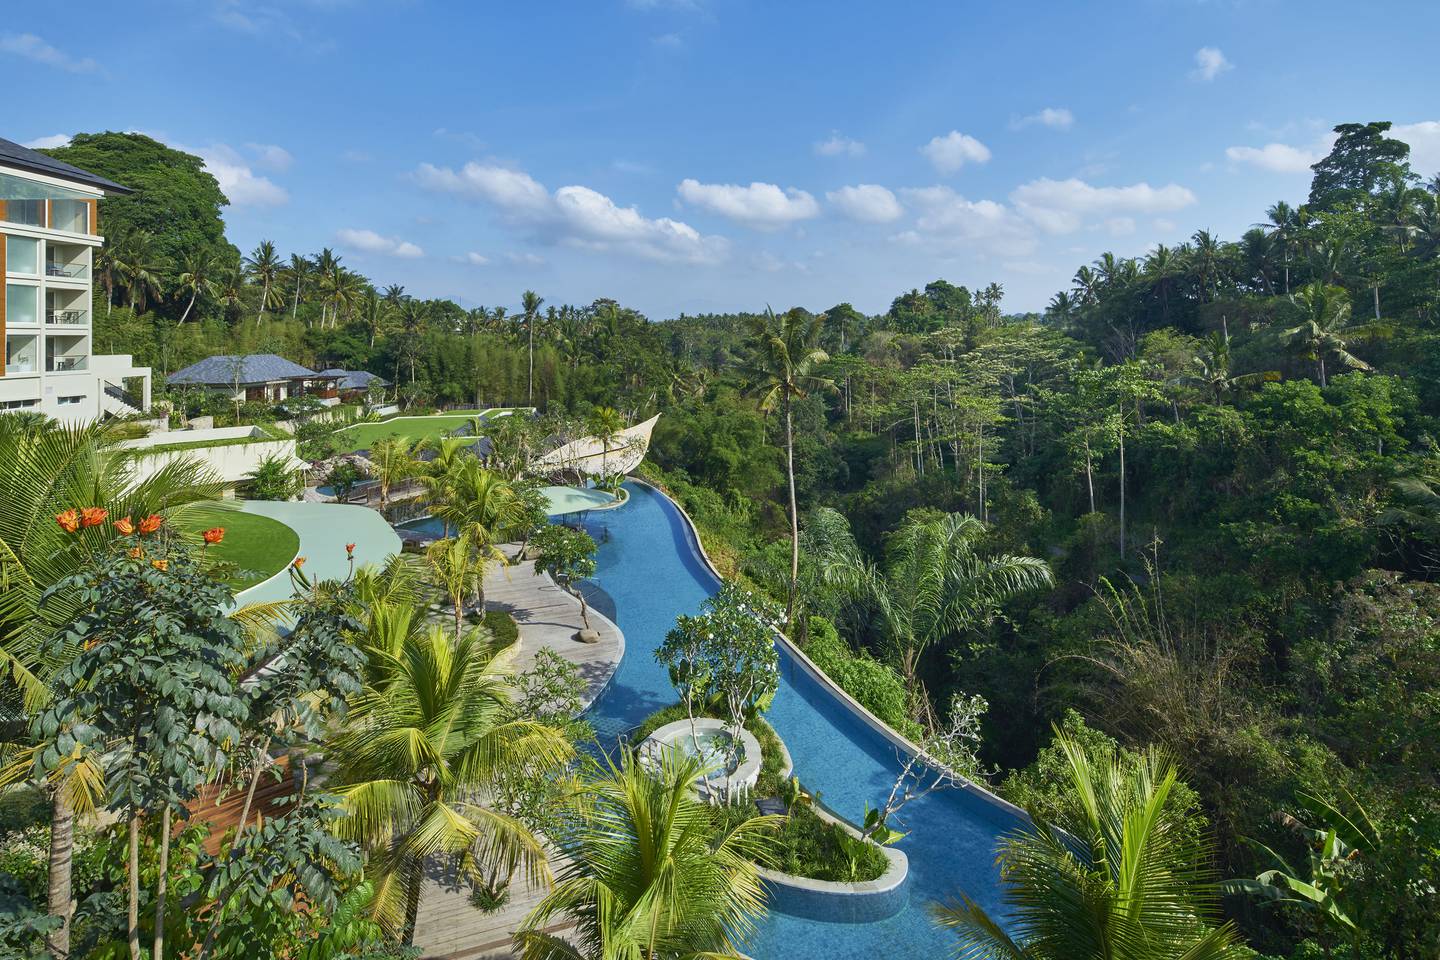 Westin Resort & Spa Ubud, Bali is surrounded by dense jungle. Photo: Marriott International